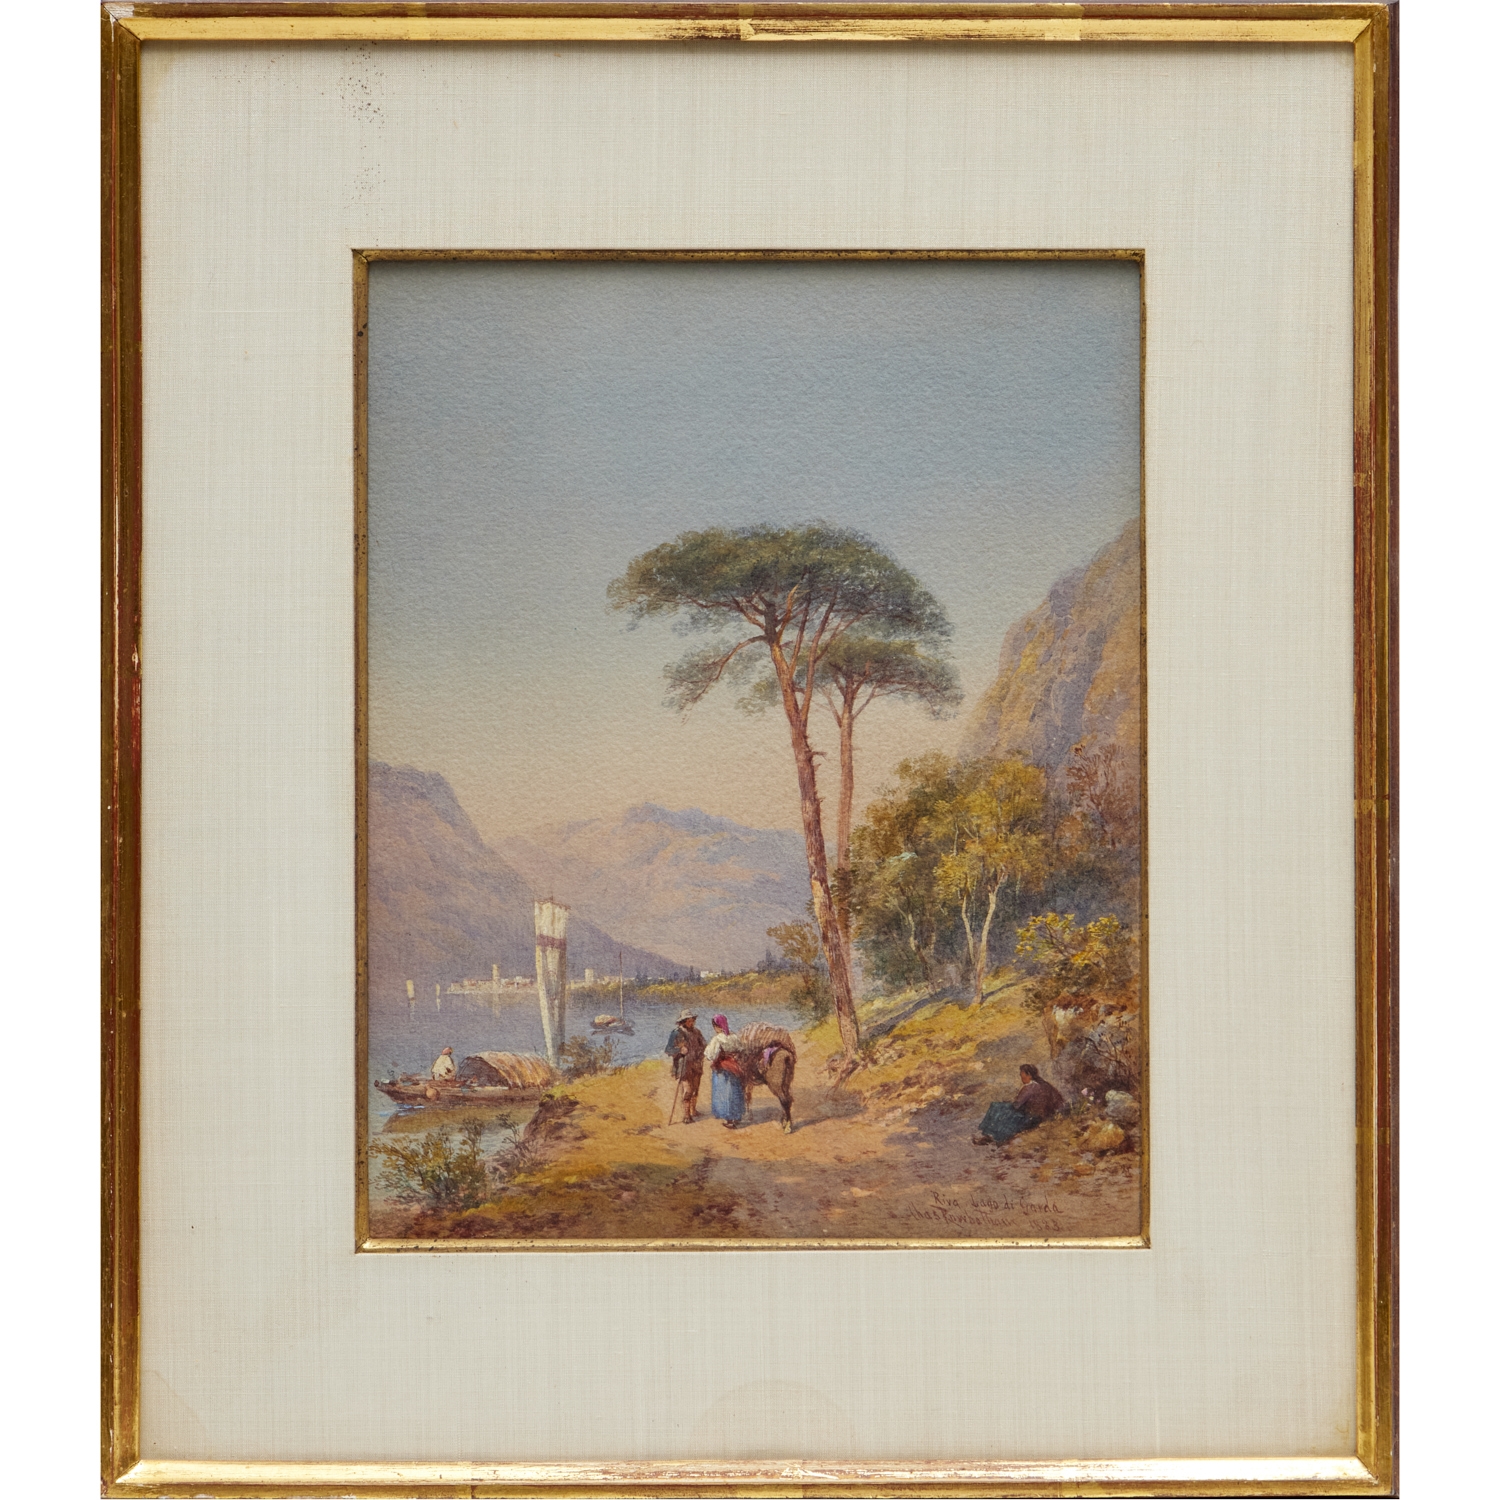 "Shore of Lake Garda" by Charles Edmund Rowbotham, 1883